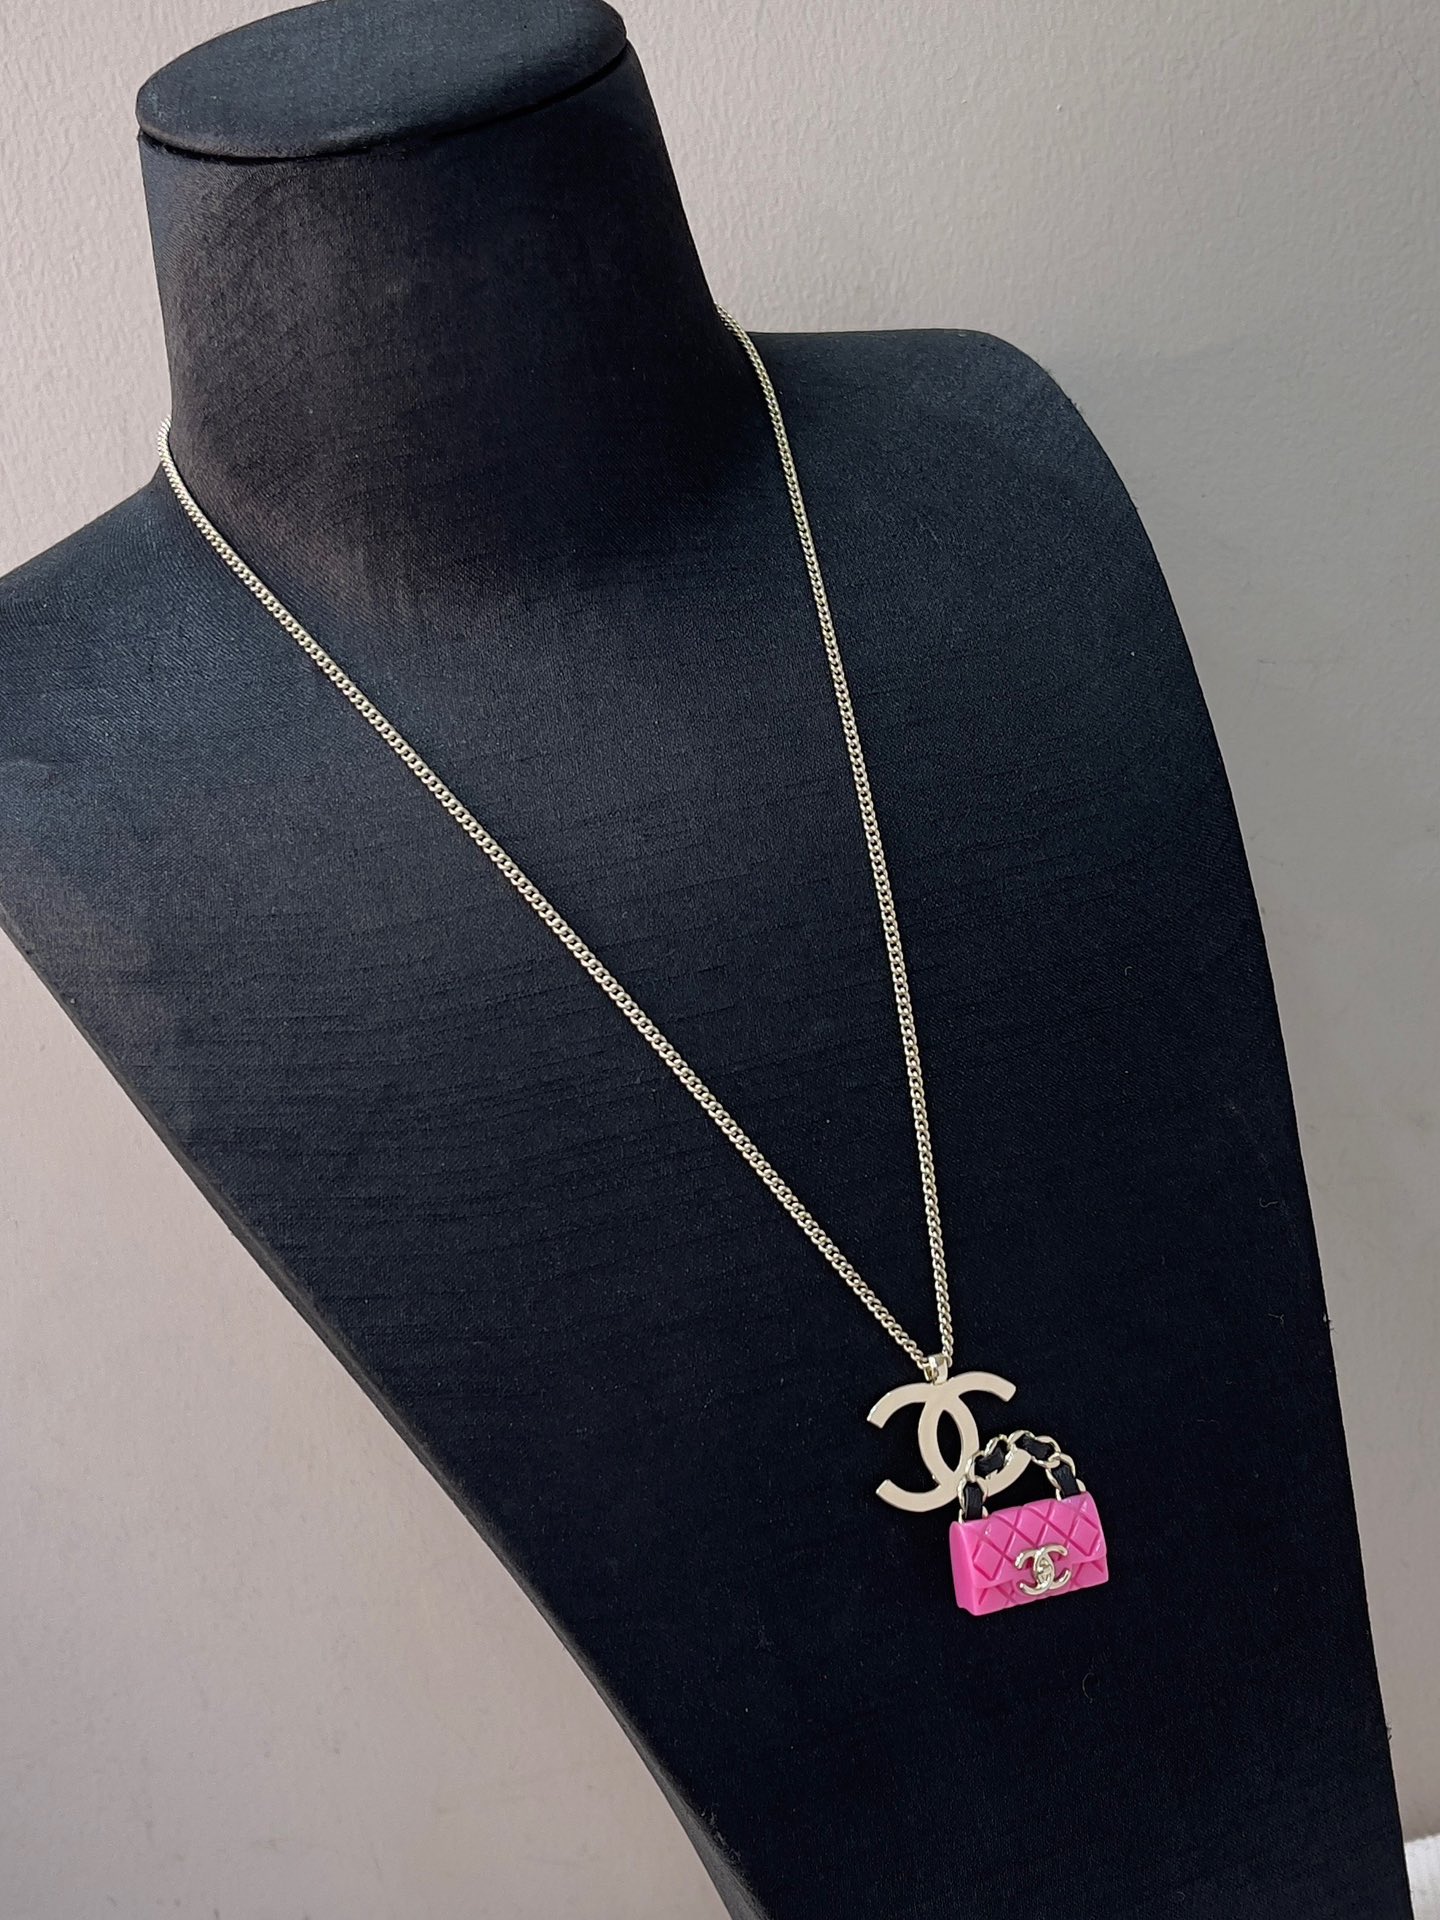 Chanel Rhombic Lattice Bag Necklace